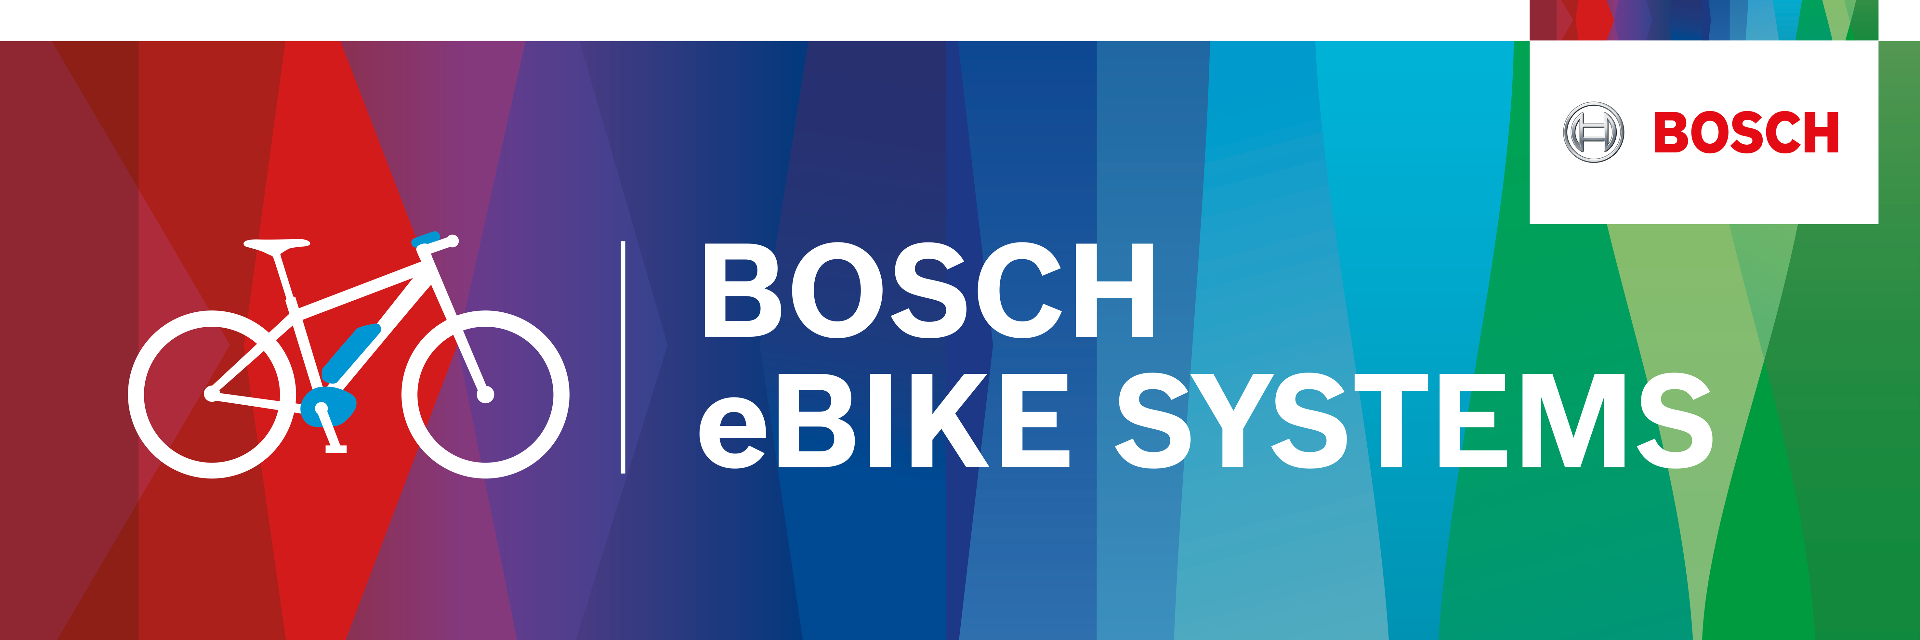 Bosch_ebike_Logo